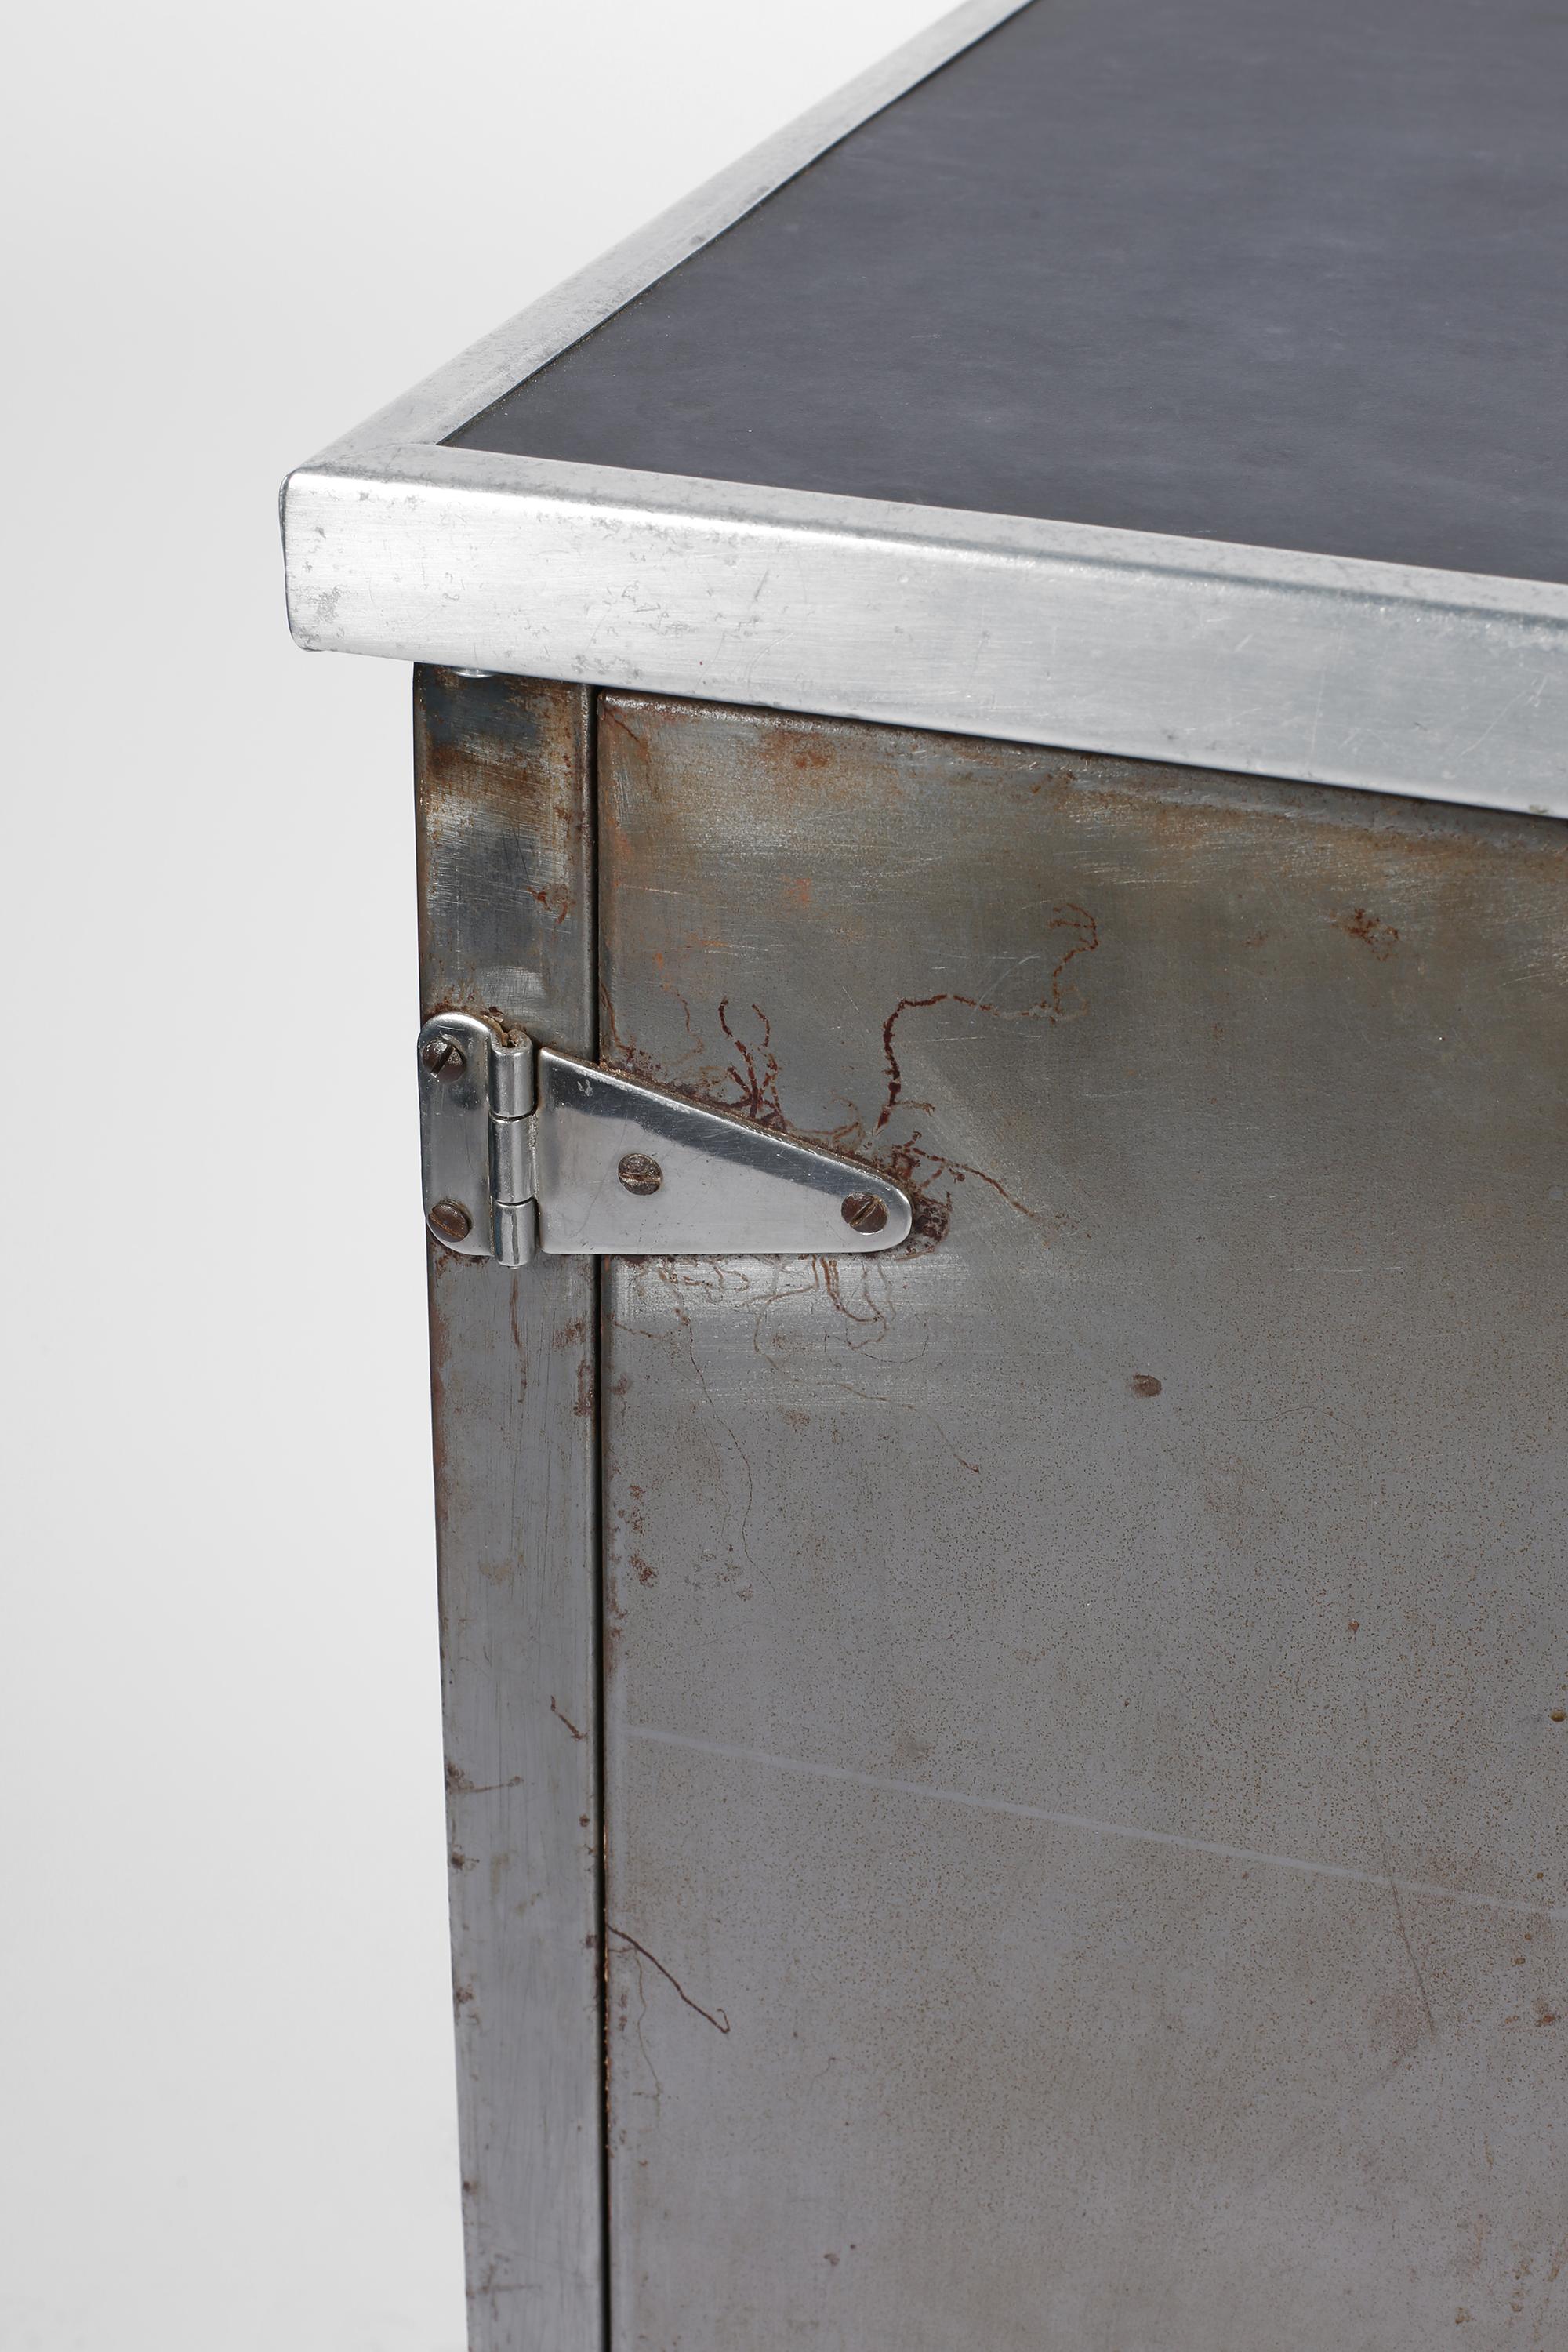 English 1940s Modernist Stripped Steel Low Cupboard Industrial Cabinet Midcentury Modern